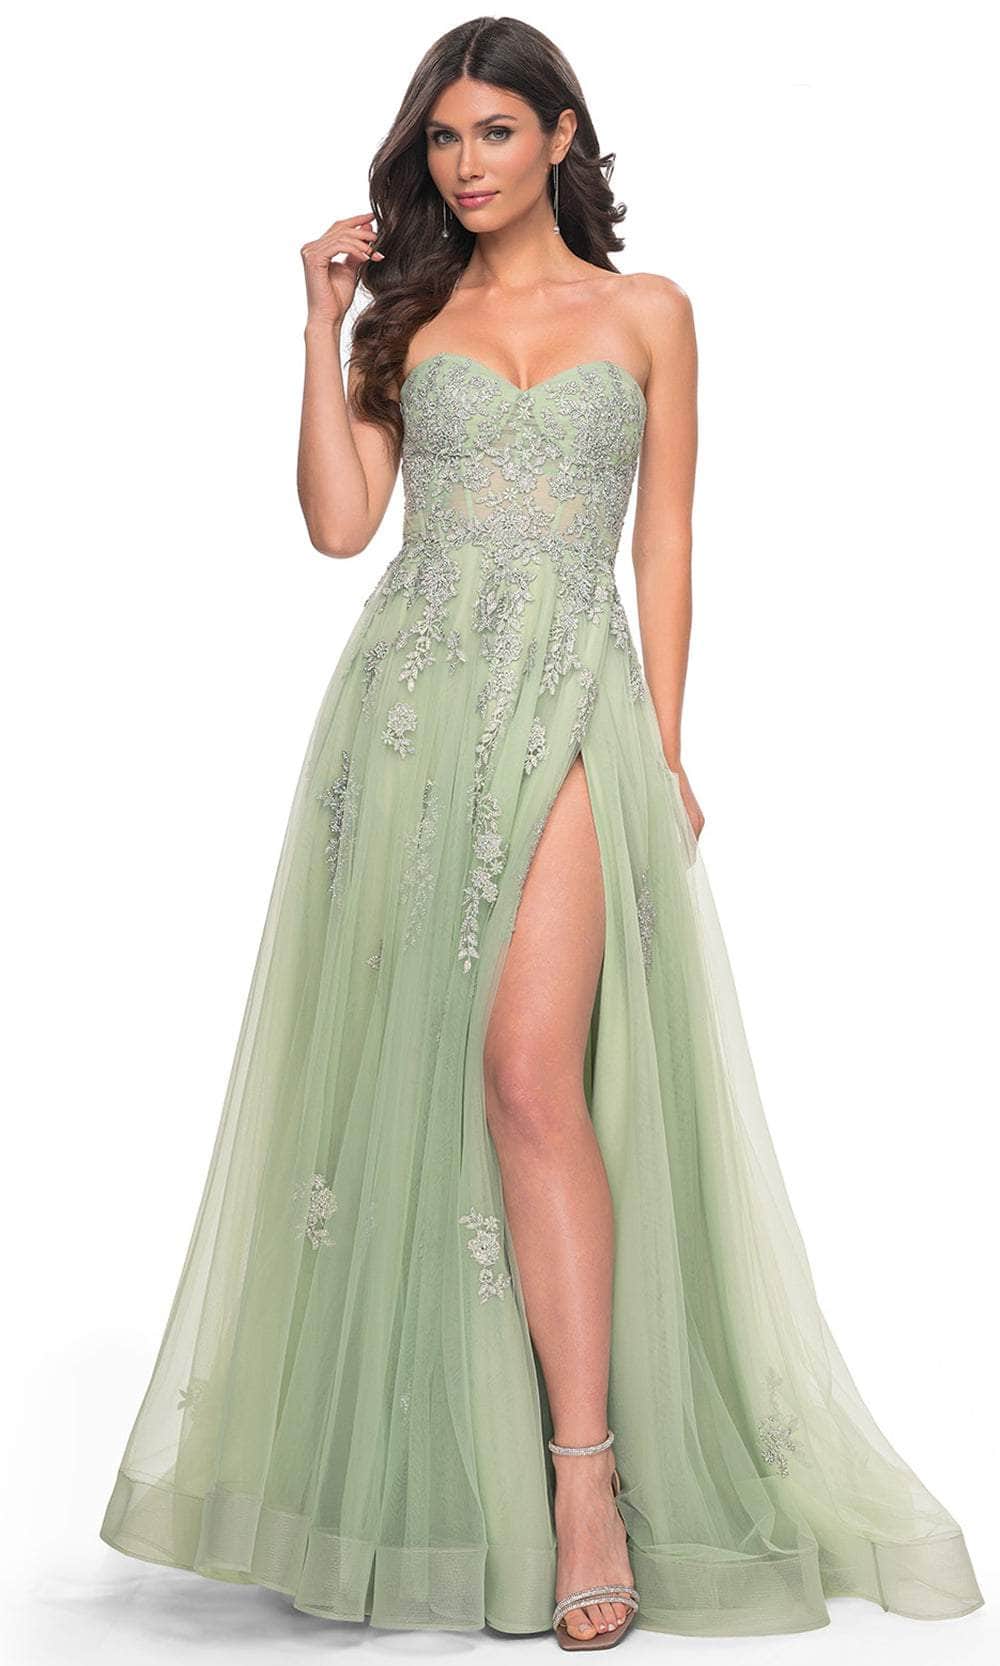 La Femme 32084 - Strapless Lace Prom Dress Prom Dresses 00 / Sage